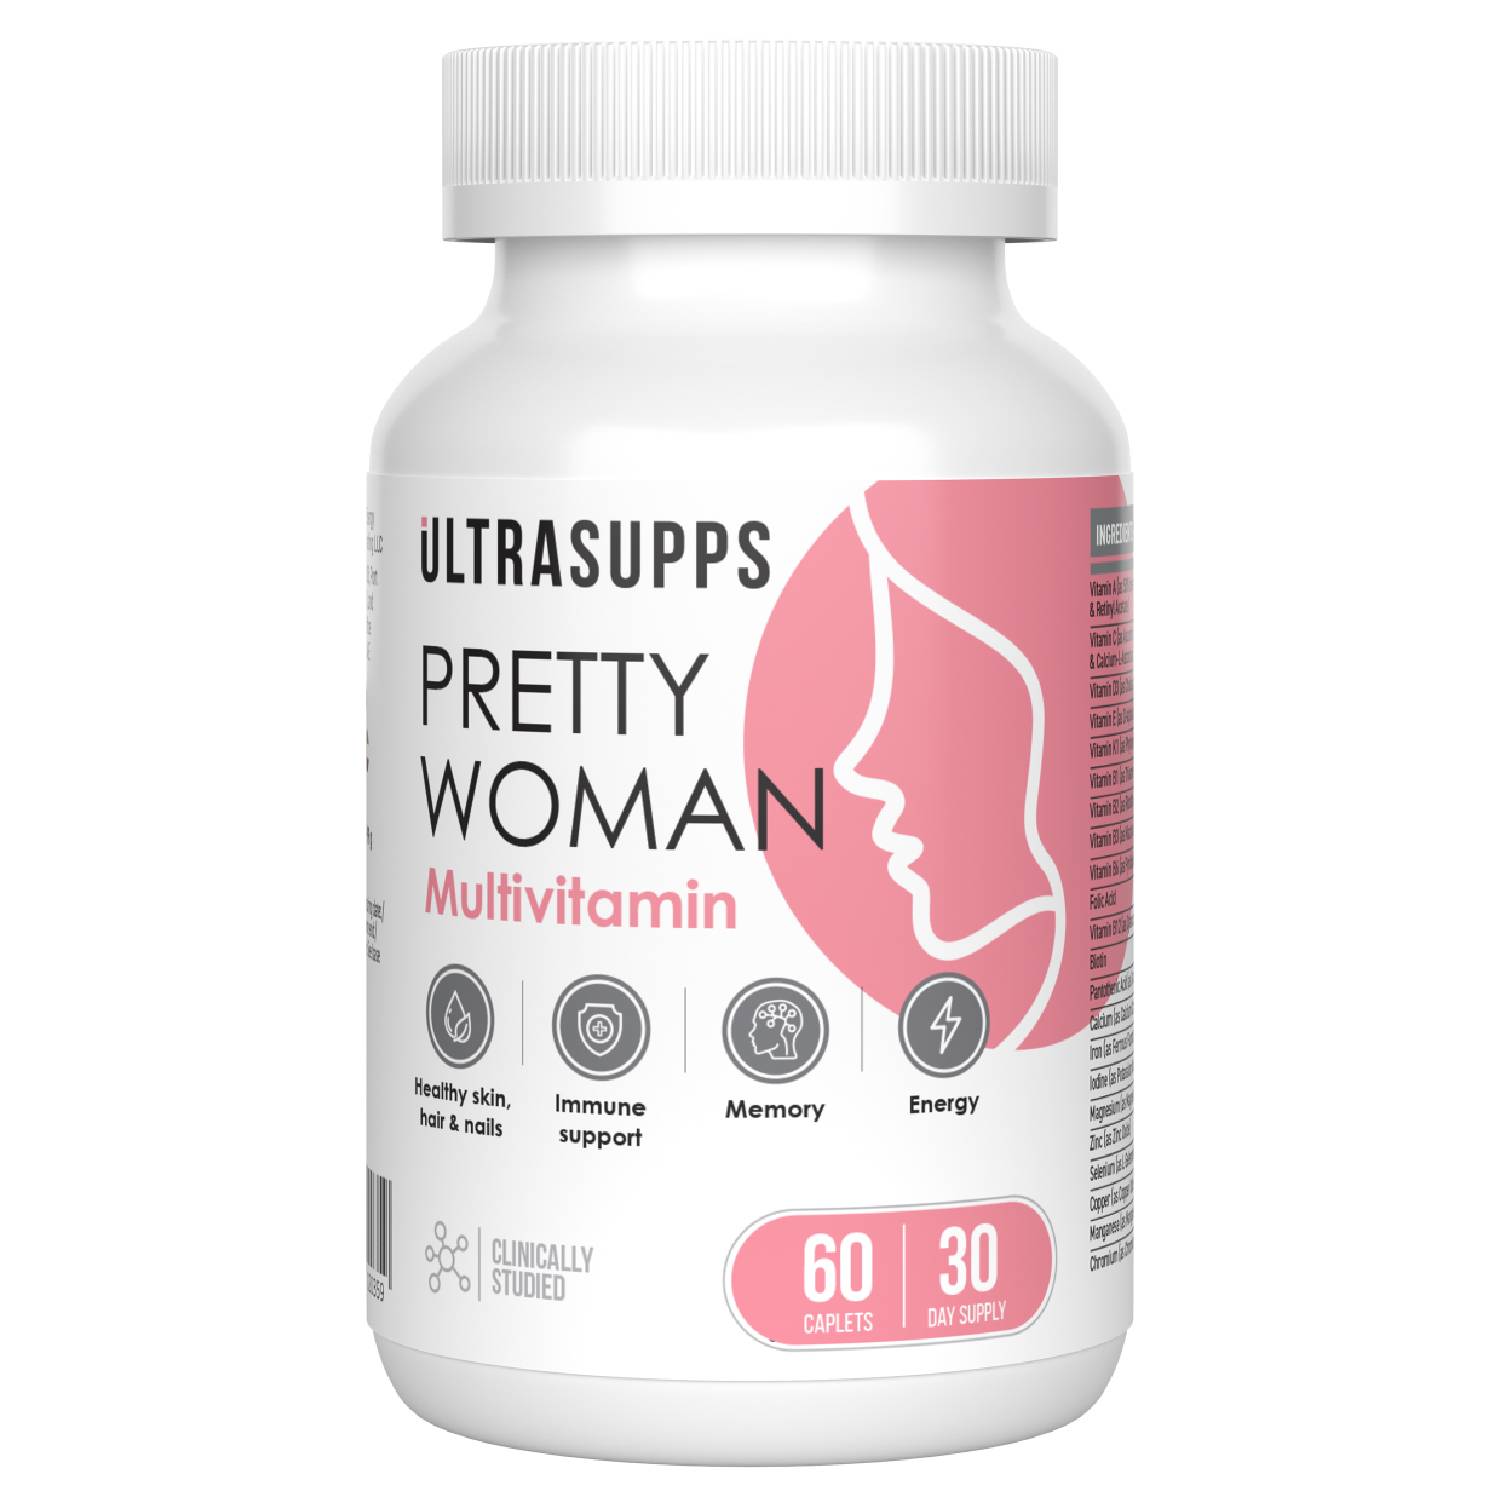 Ultrasupps Витаминно-минеральный комплекс для женщин Pretty Woman Multivitamin, 60 каплет (Ultrasupps, )